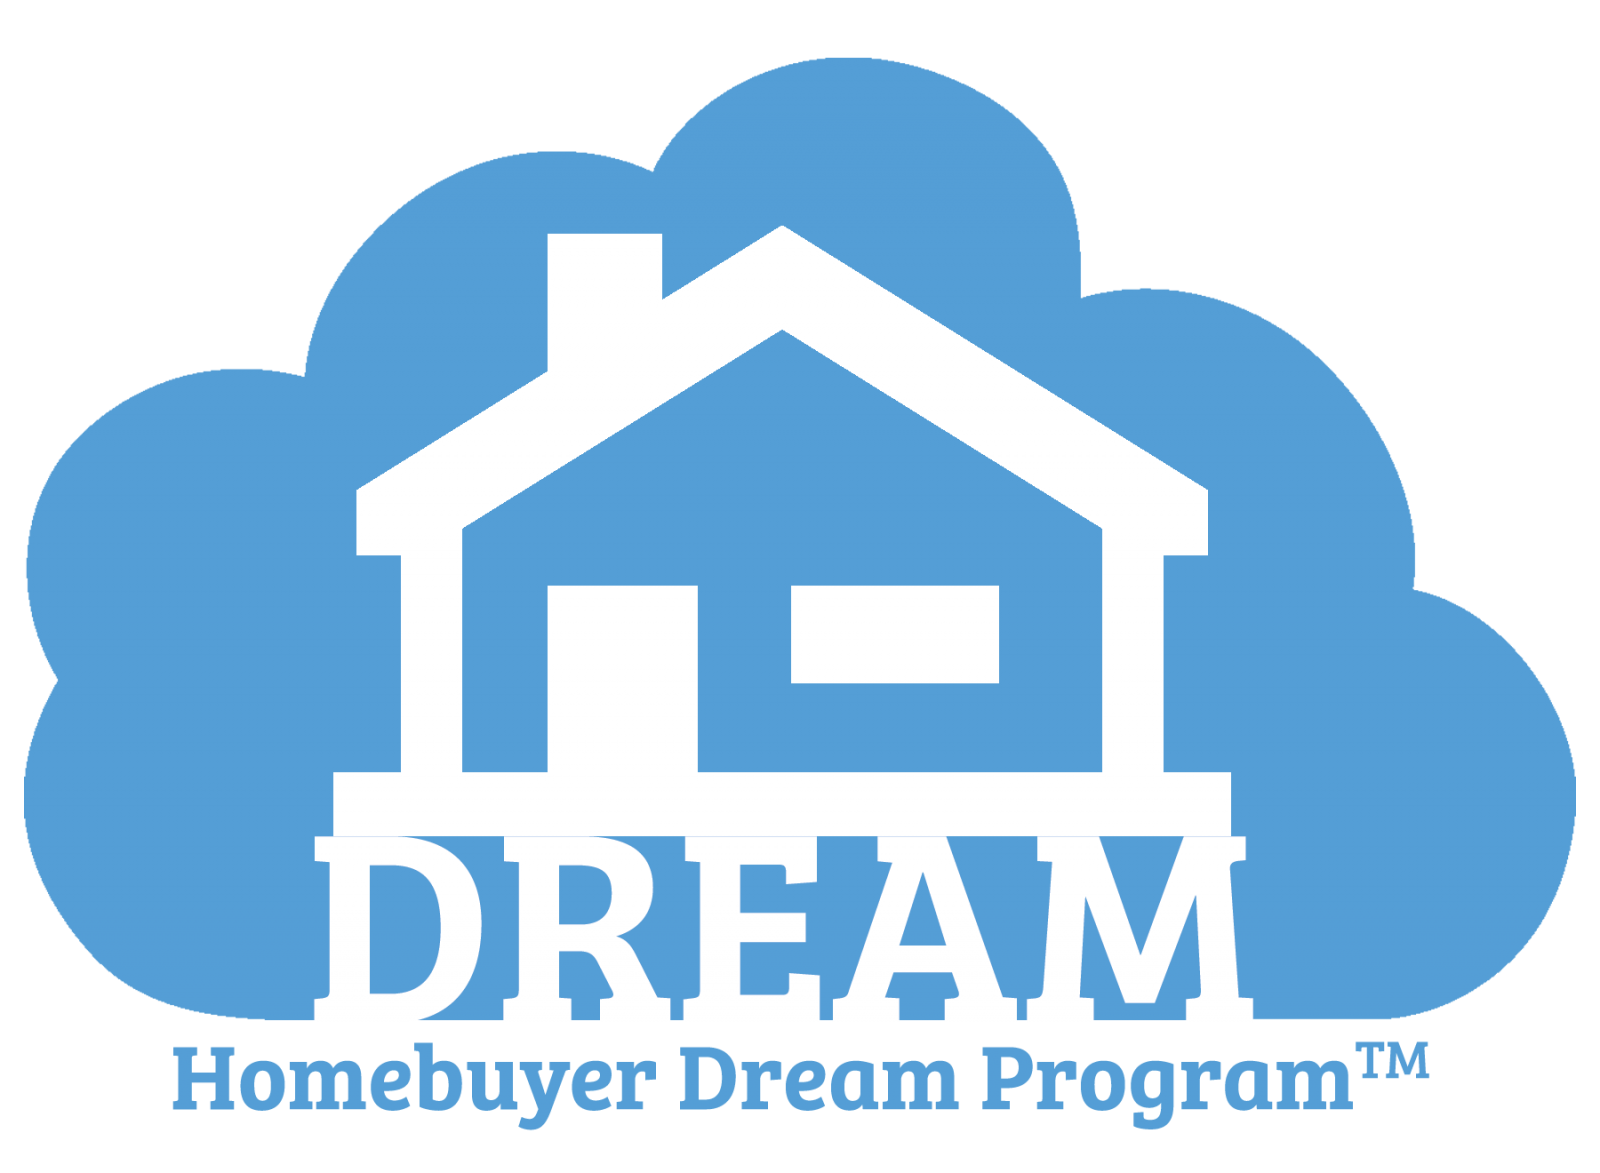 Homebuyer dream program